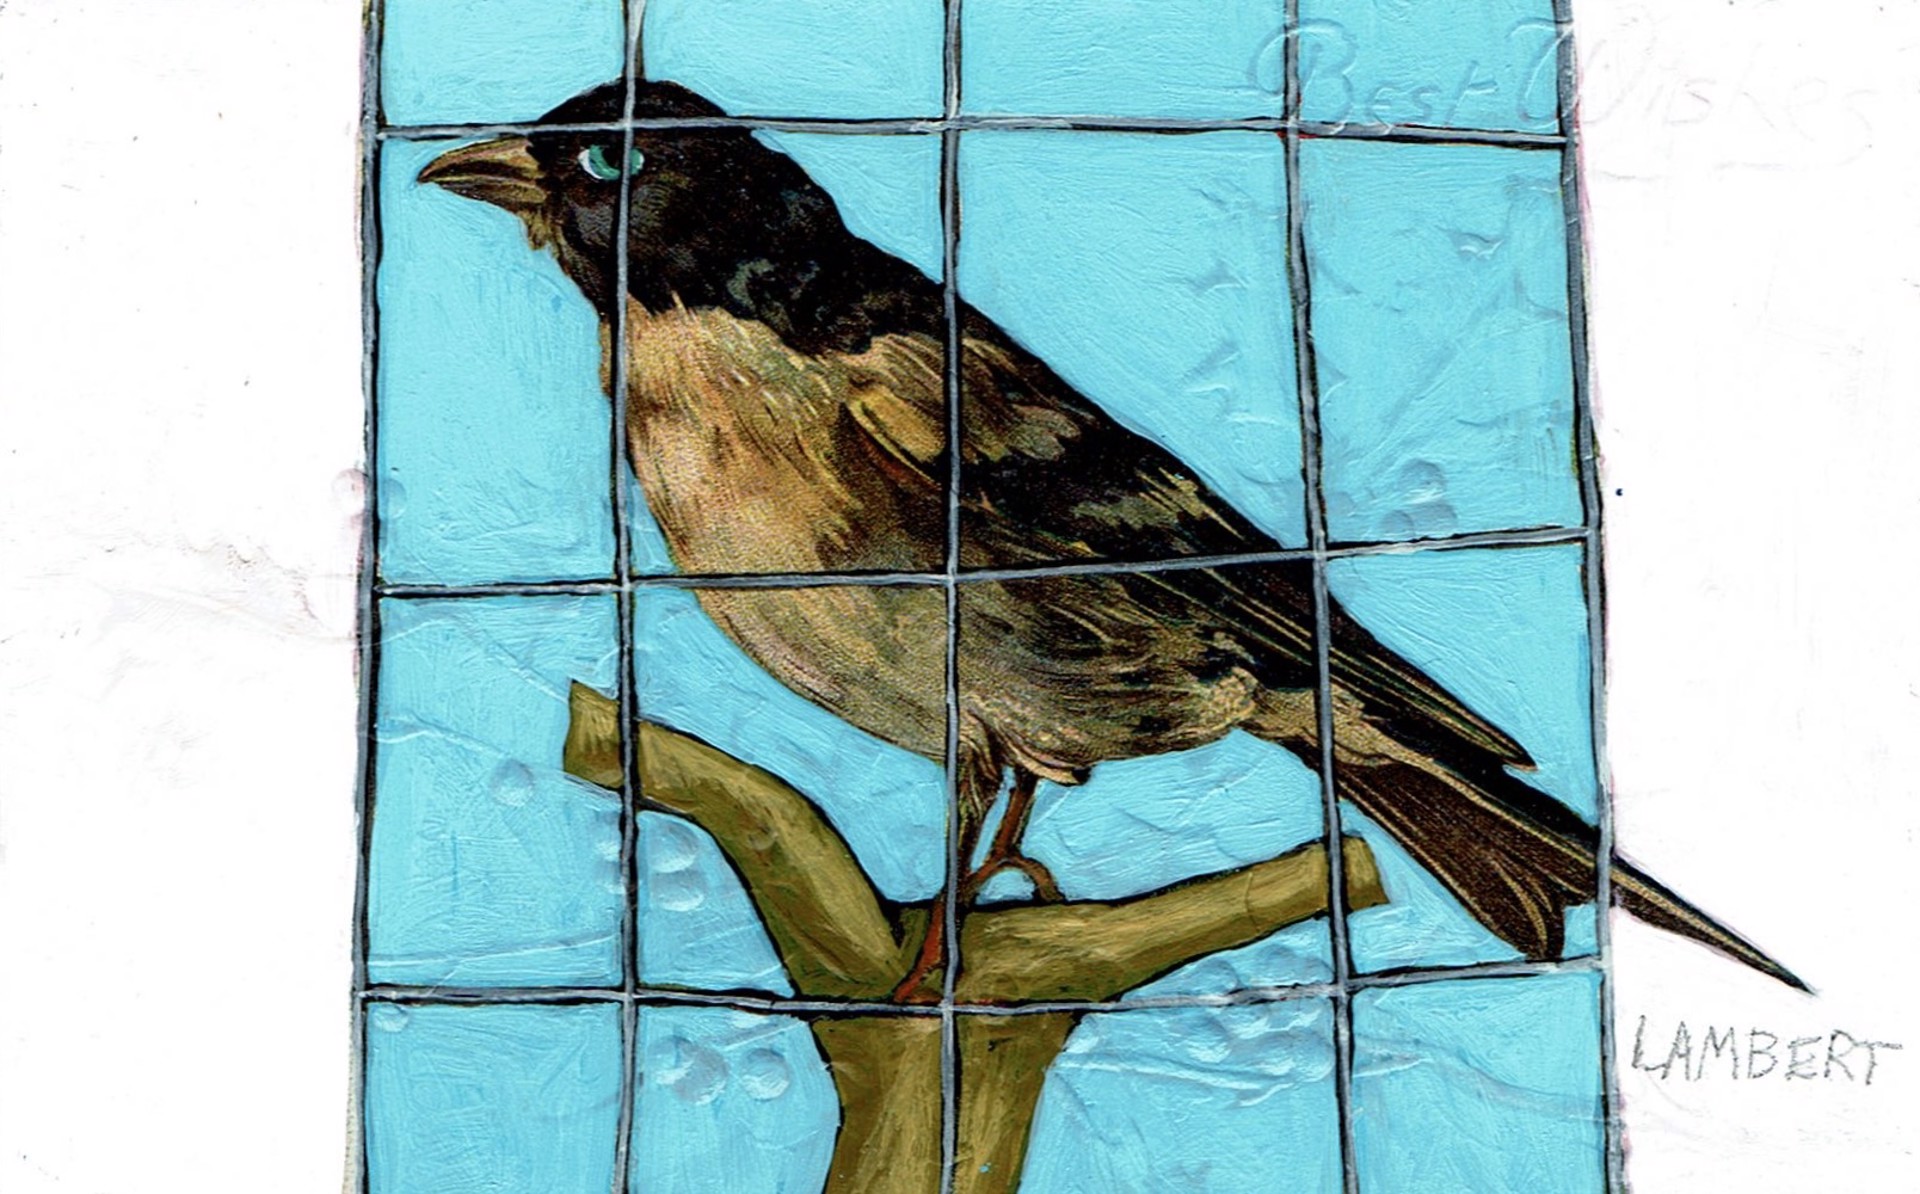 Caged Bird by David Lambert